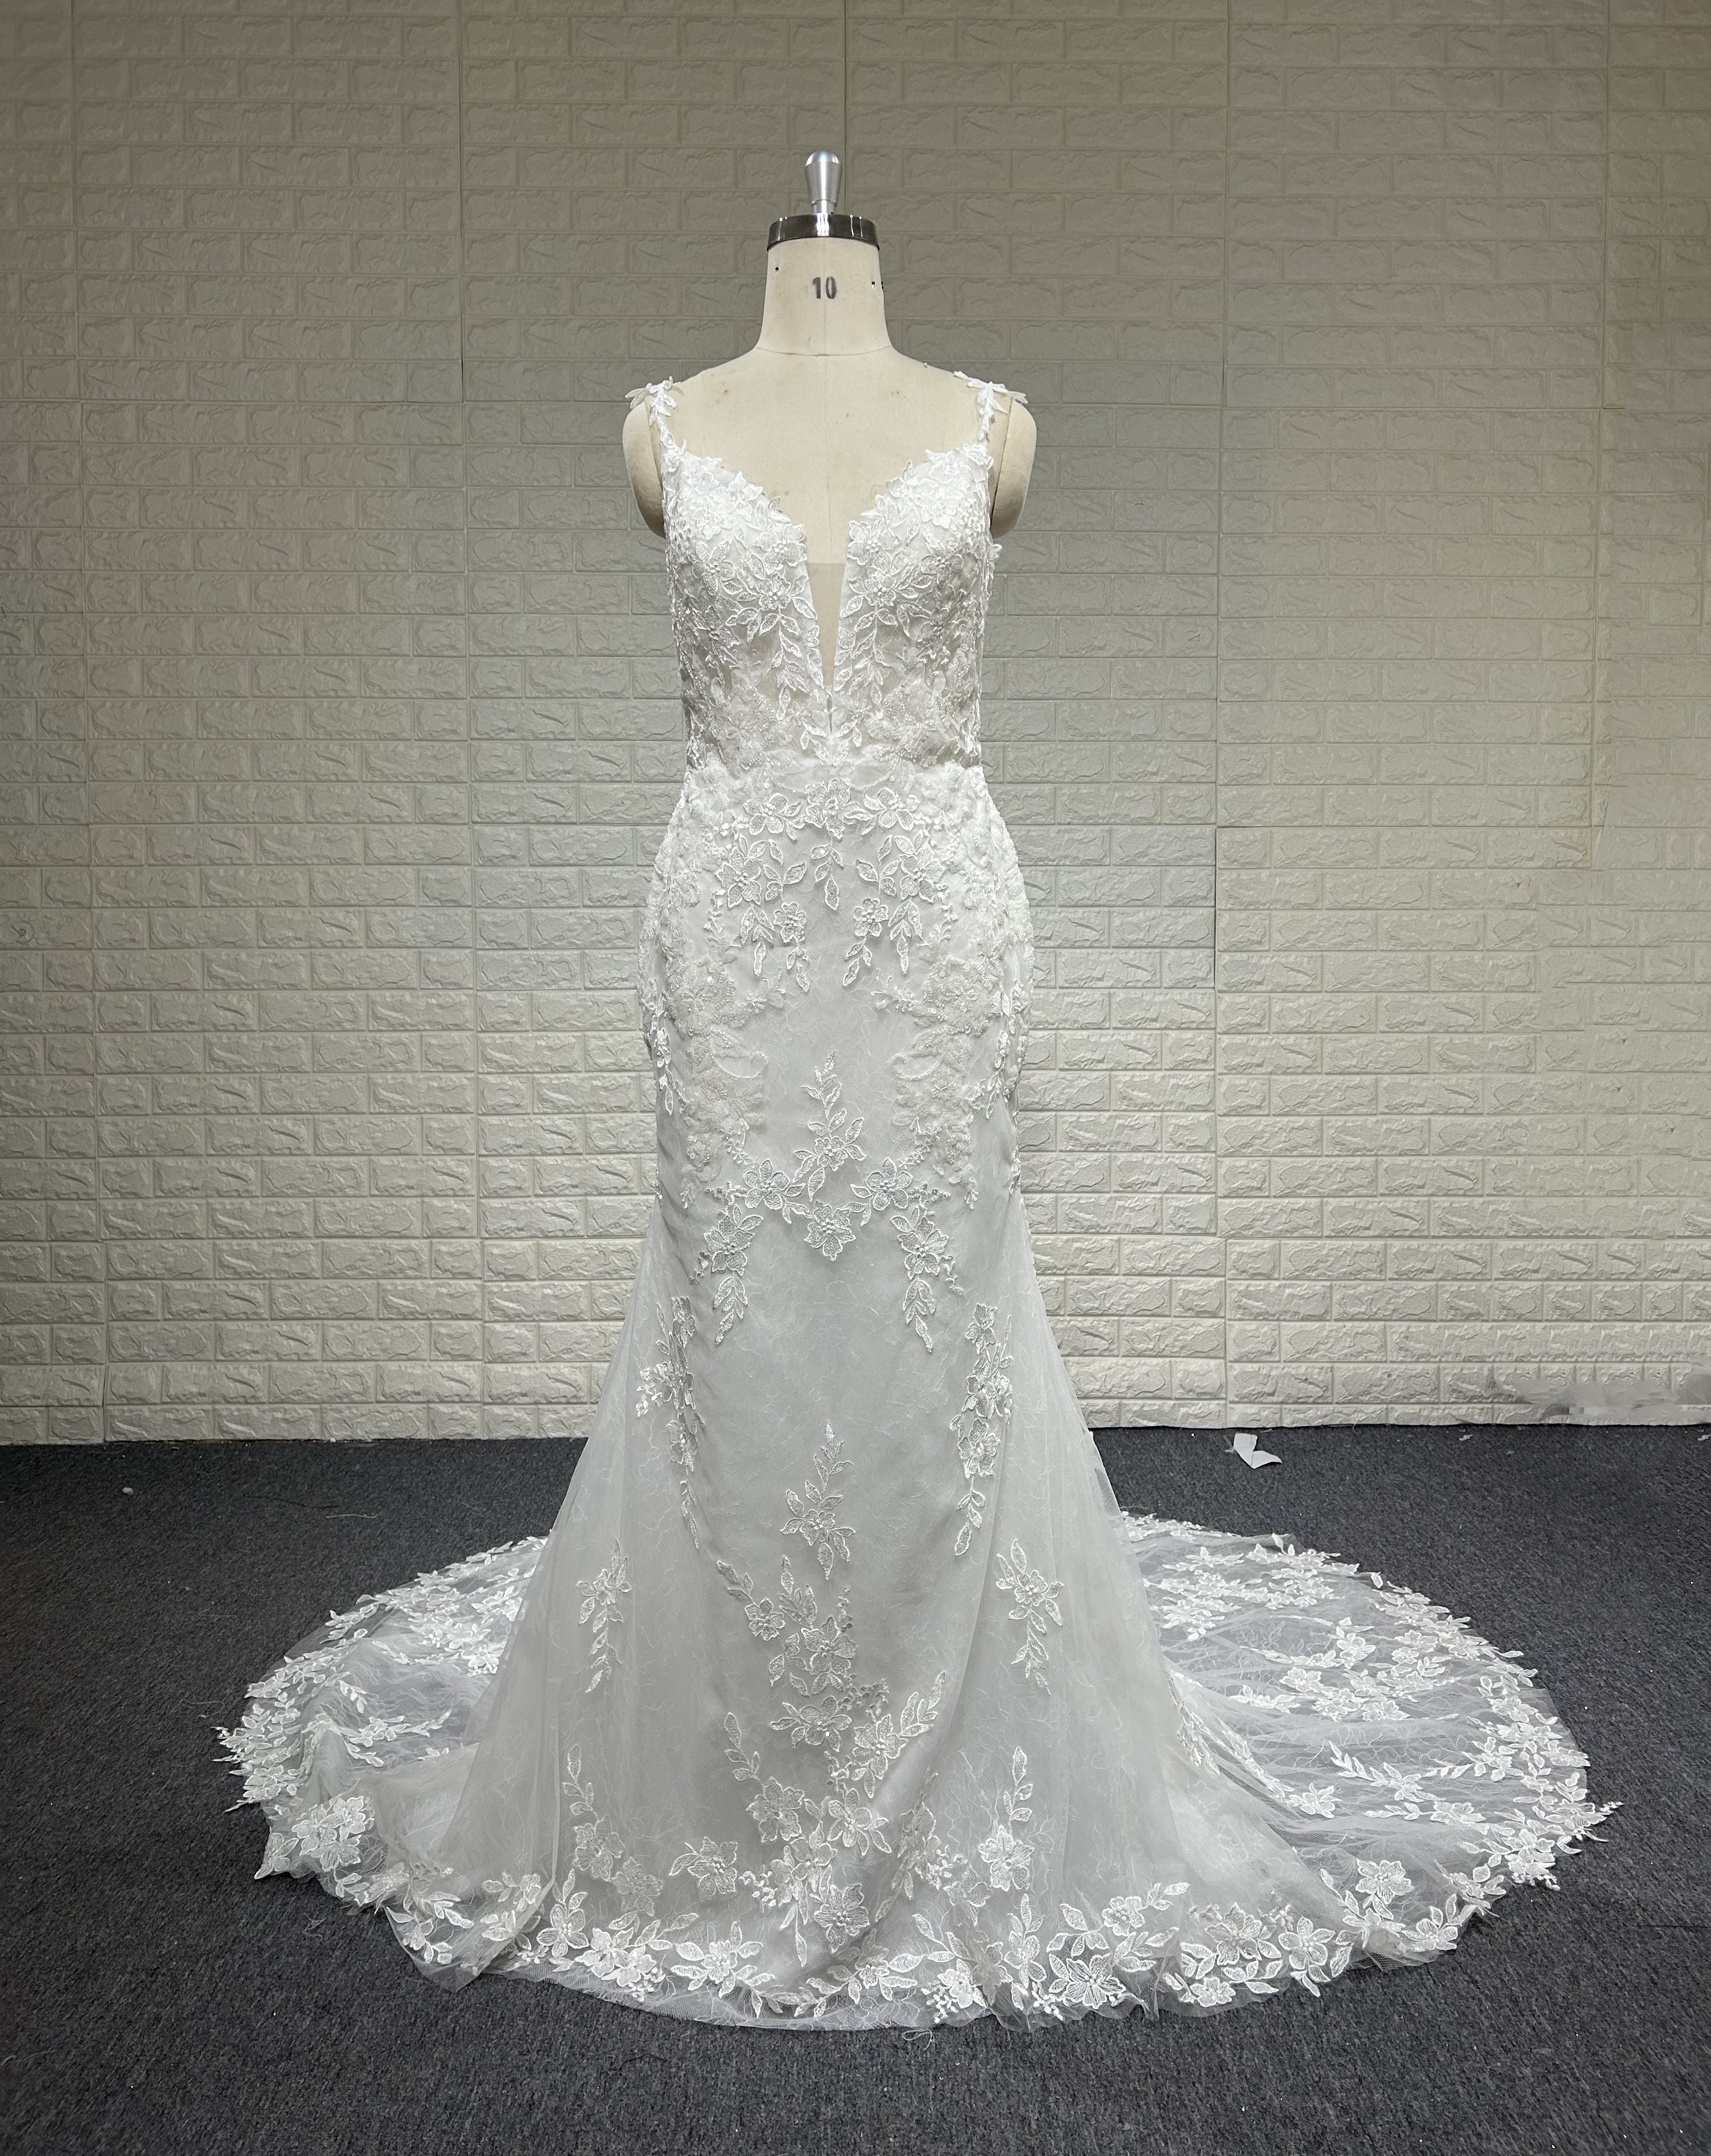  Thin strap Mermaid wedding dress / Trumpet V bateau Neck Chapel Train wedding gown  Lace decorative with Pearl/Appliques